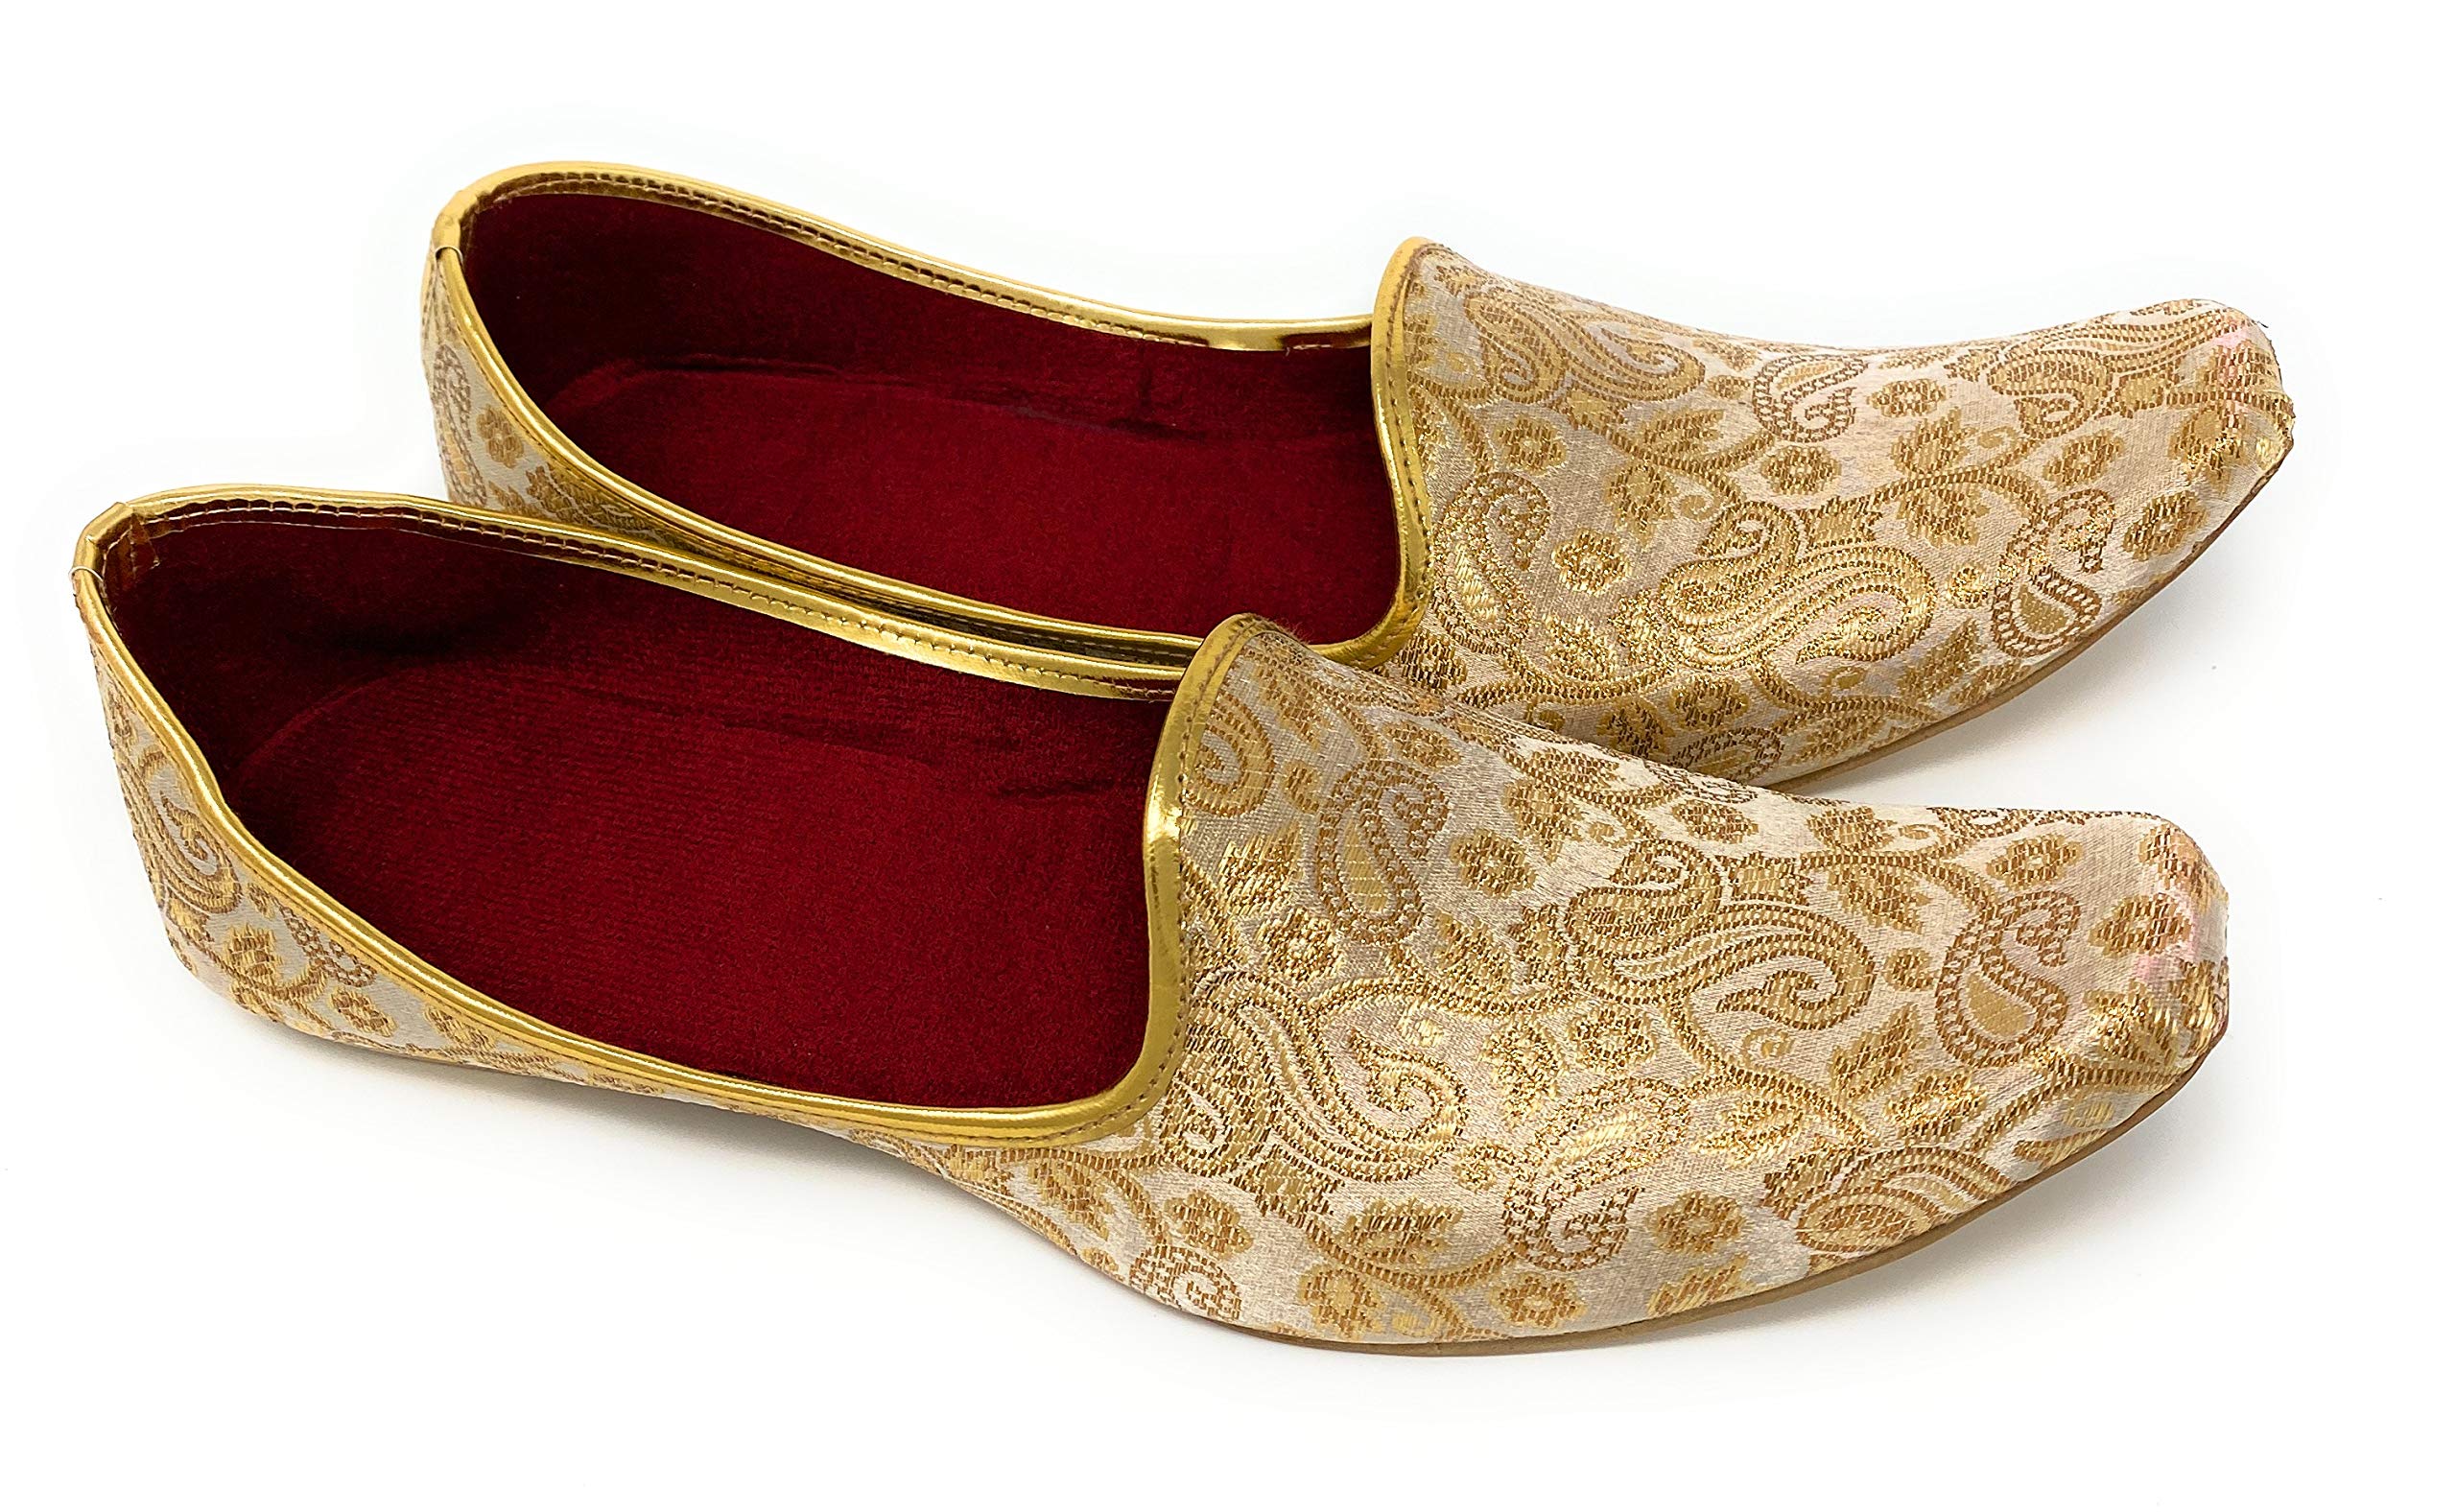 BombayFlow RANVEER Punjabi Jutti Indian Flats Handmade Shoes - Khussa Shoes, Indian Wedding, Sherwani, Kurta, Mojari Shoes